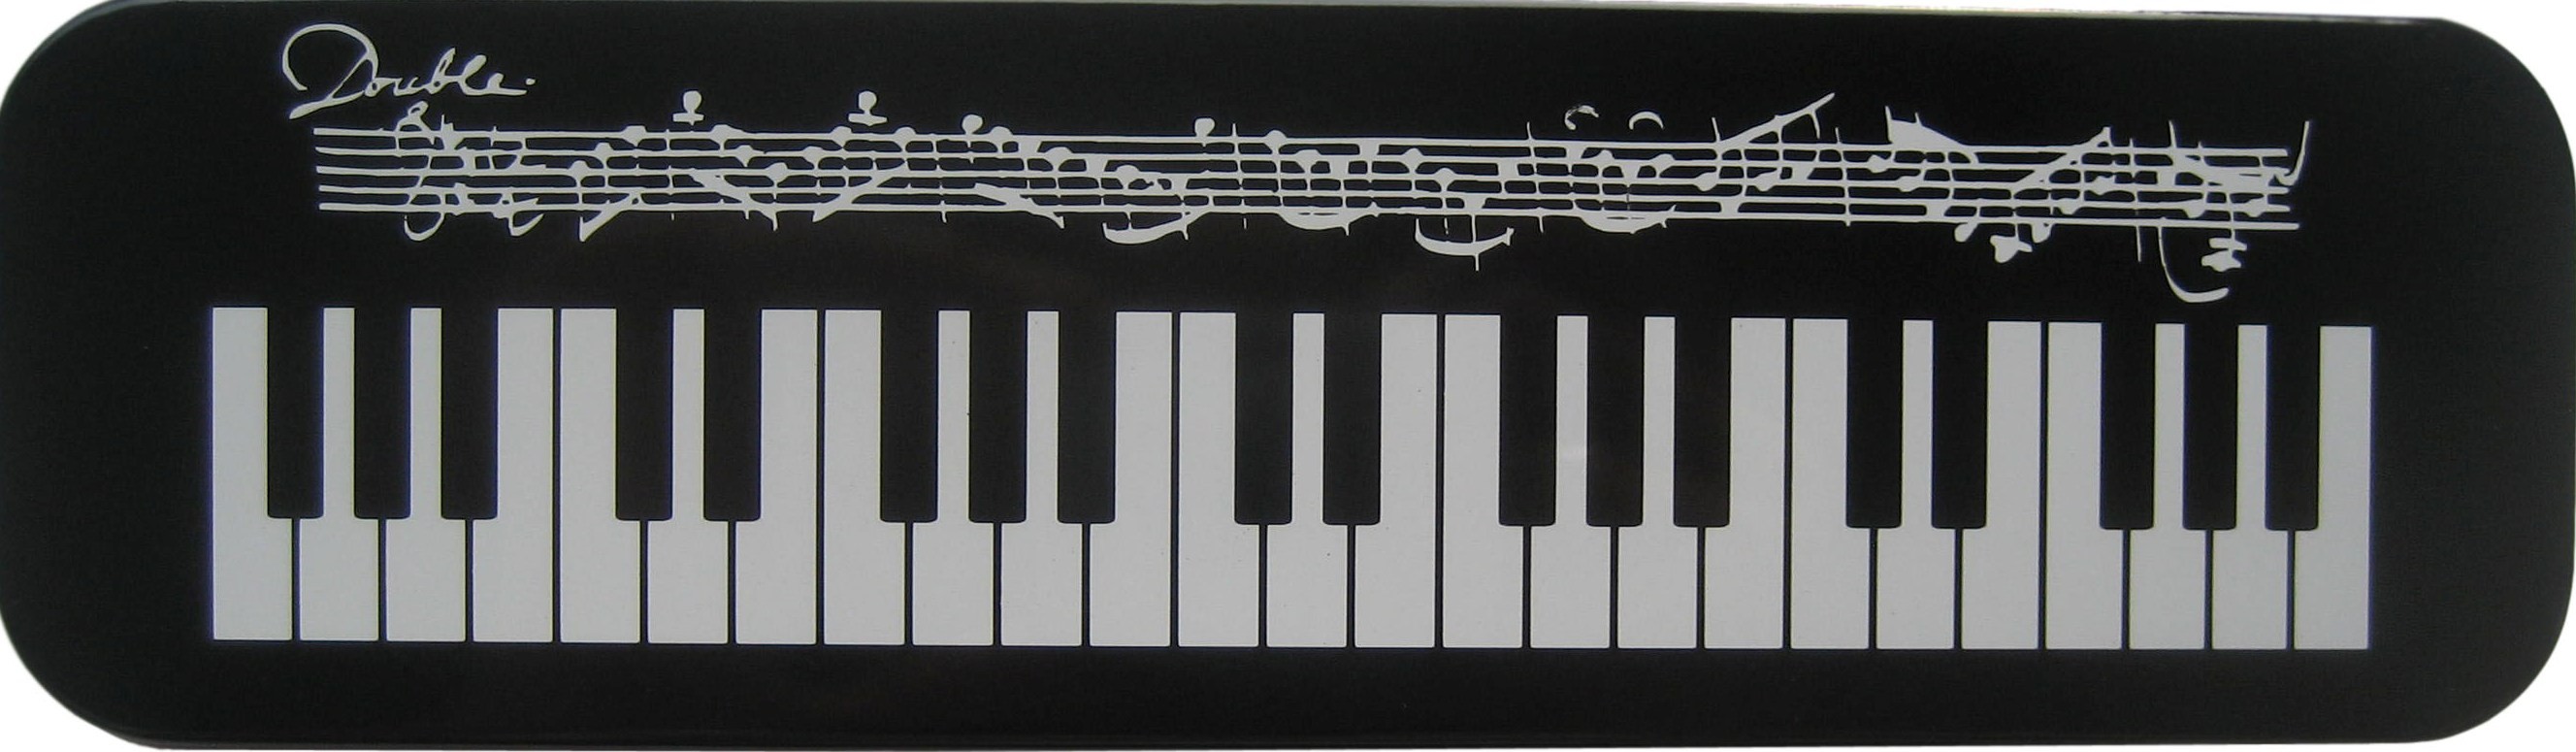 Pen Case: Piano Keys & Notes